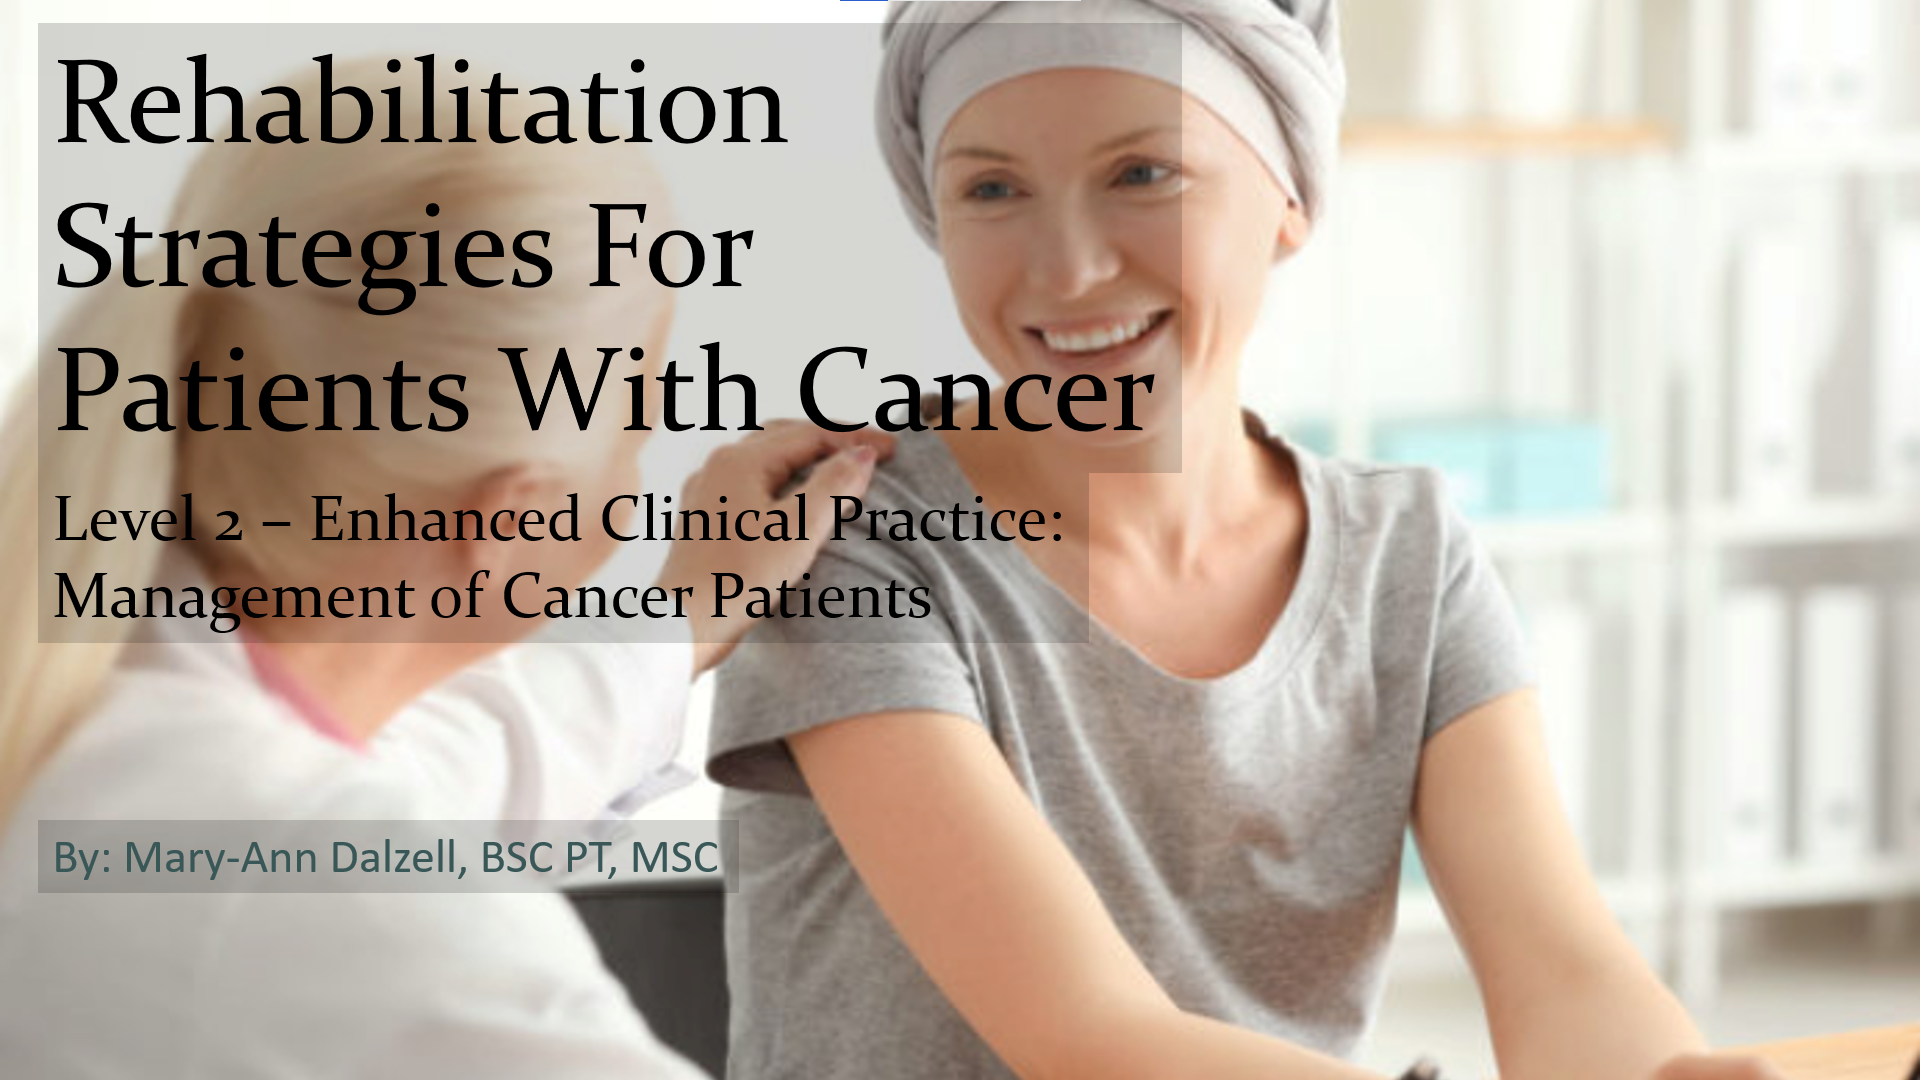 cancer rehabilitation centre thesis